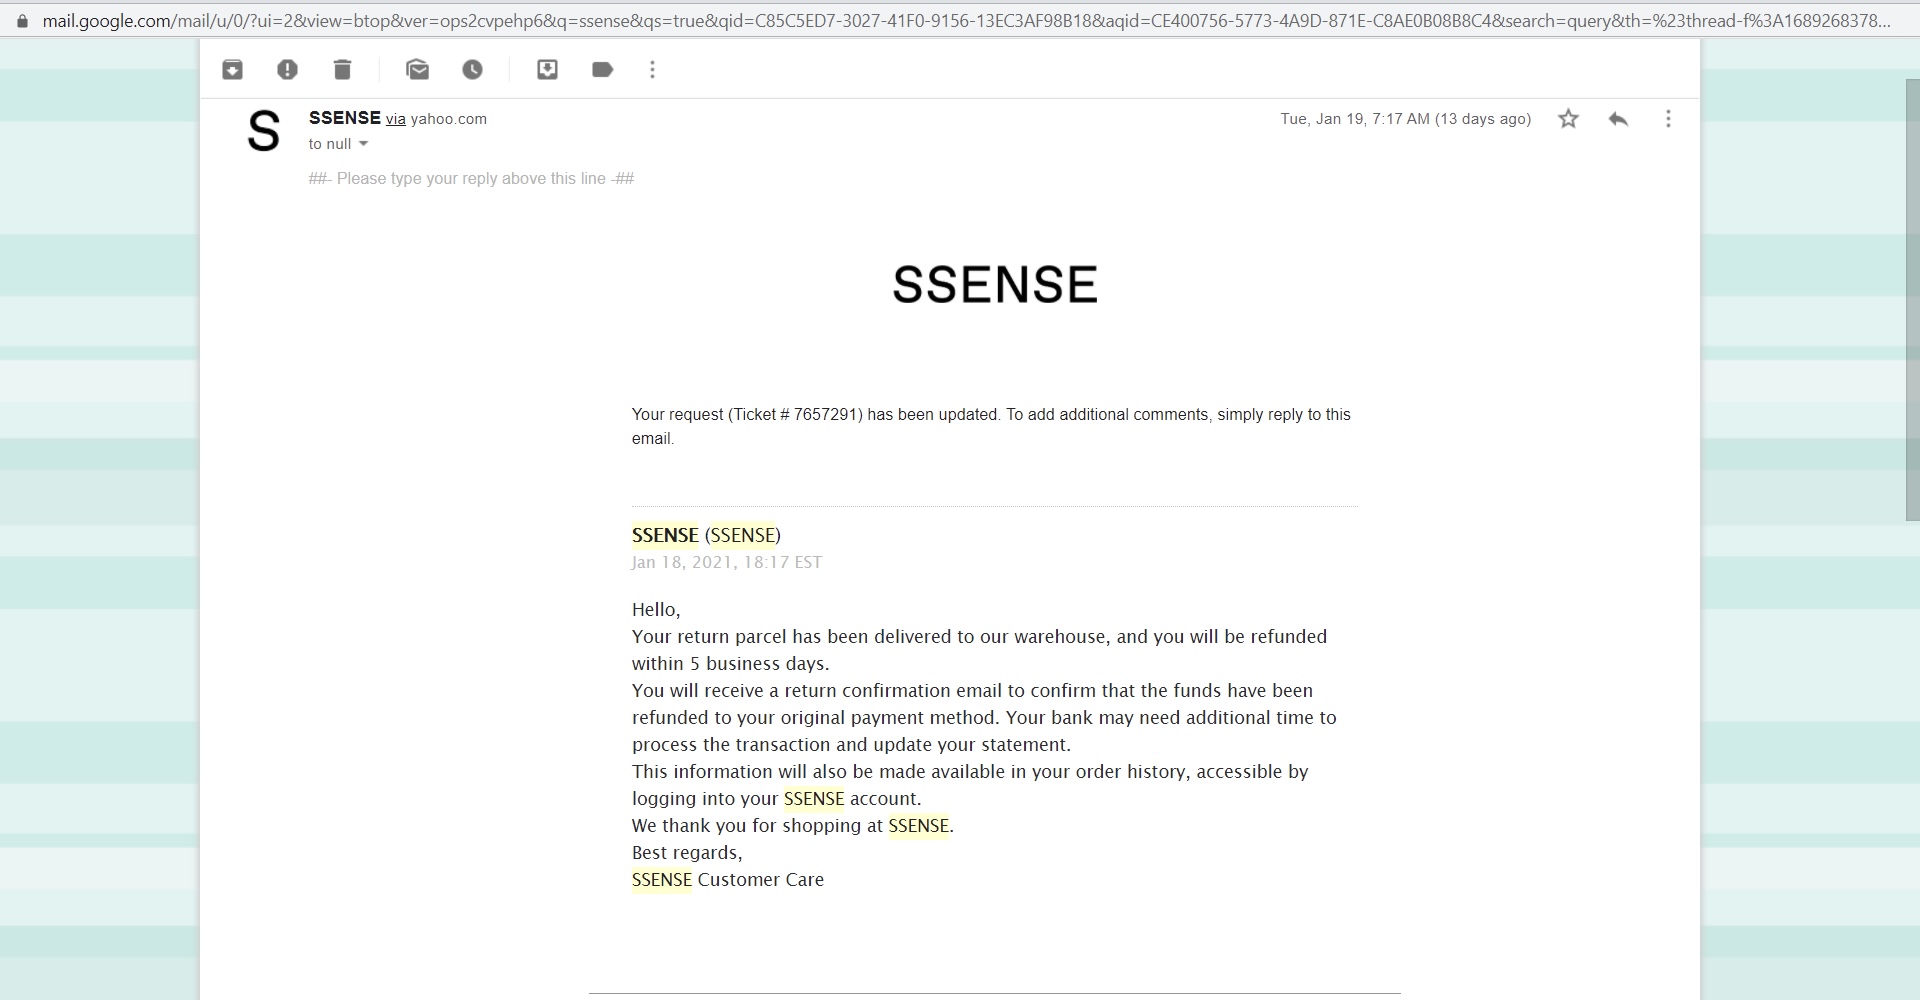 ssense website review